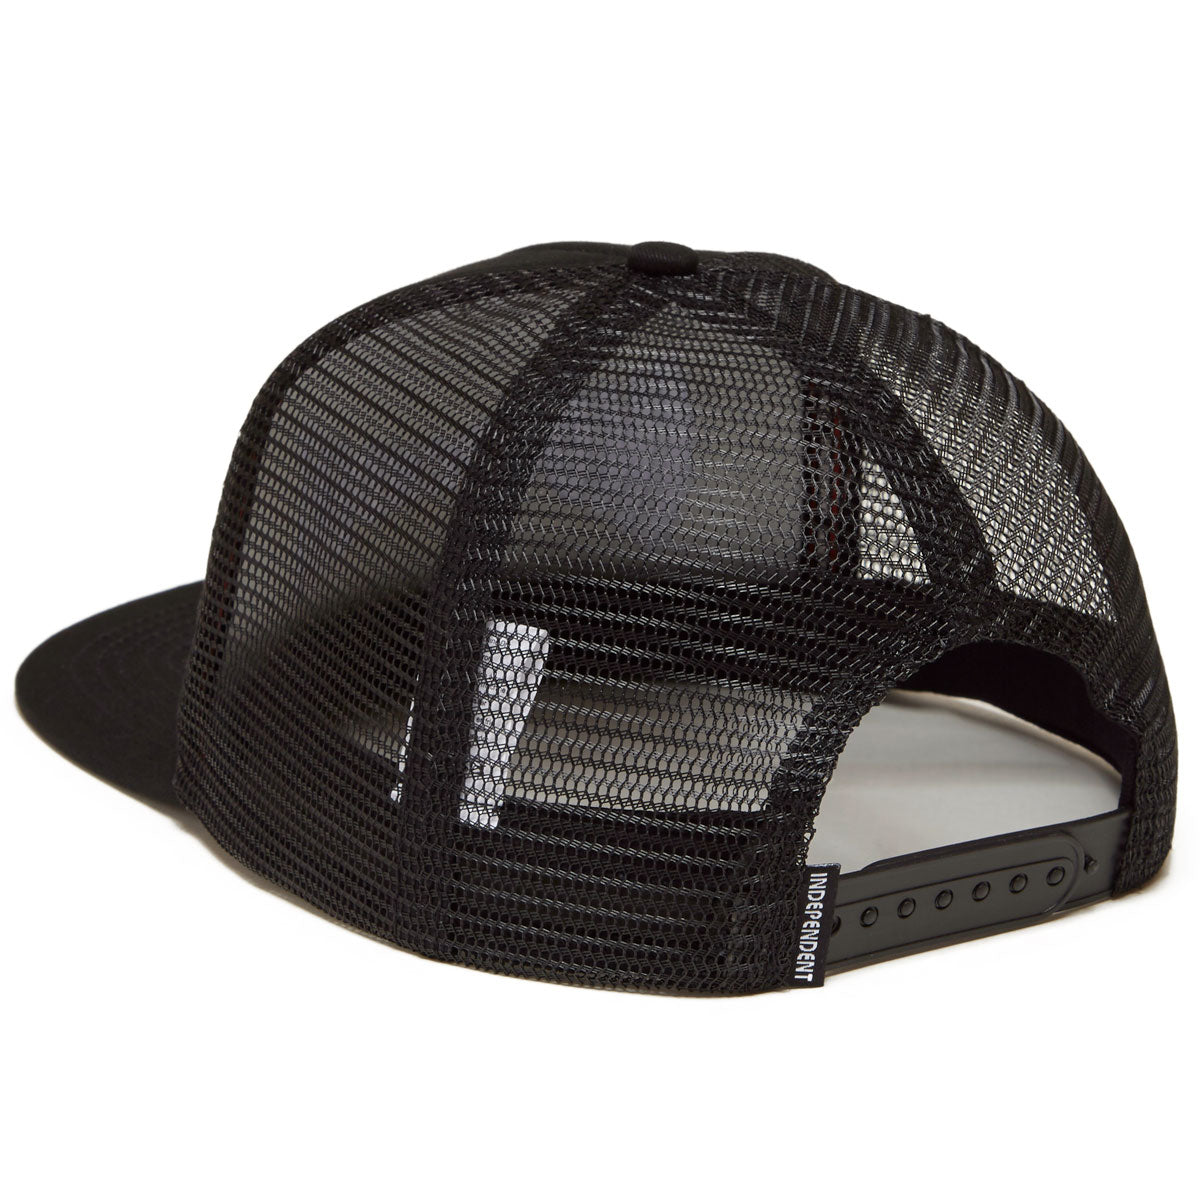 Independent Span Mesh Trucker High Profile Hat - Black image 2